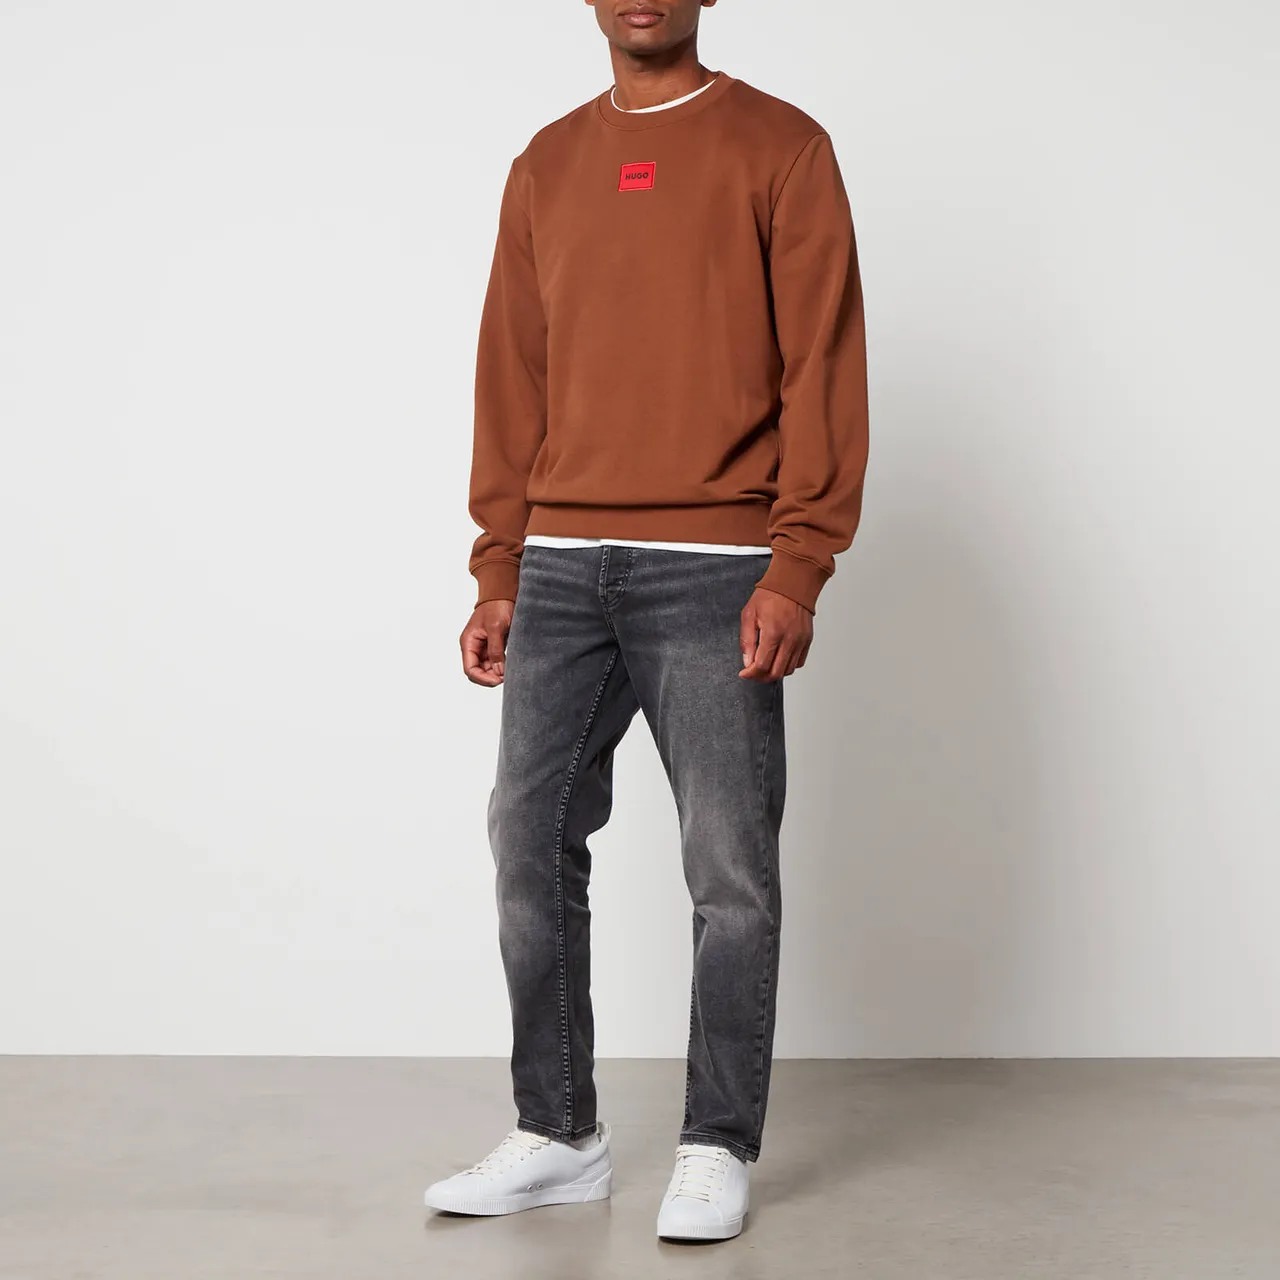 HUGO Diragol212 Cotton-Jersey Sweatshirt